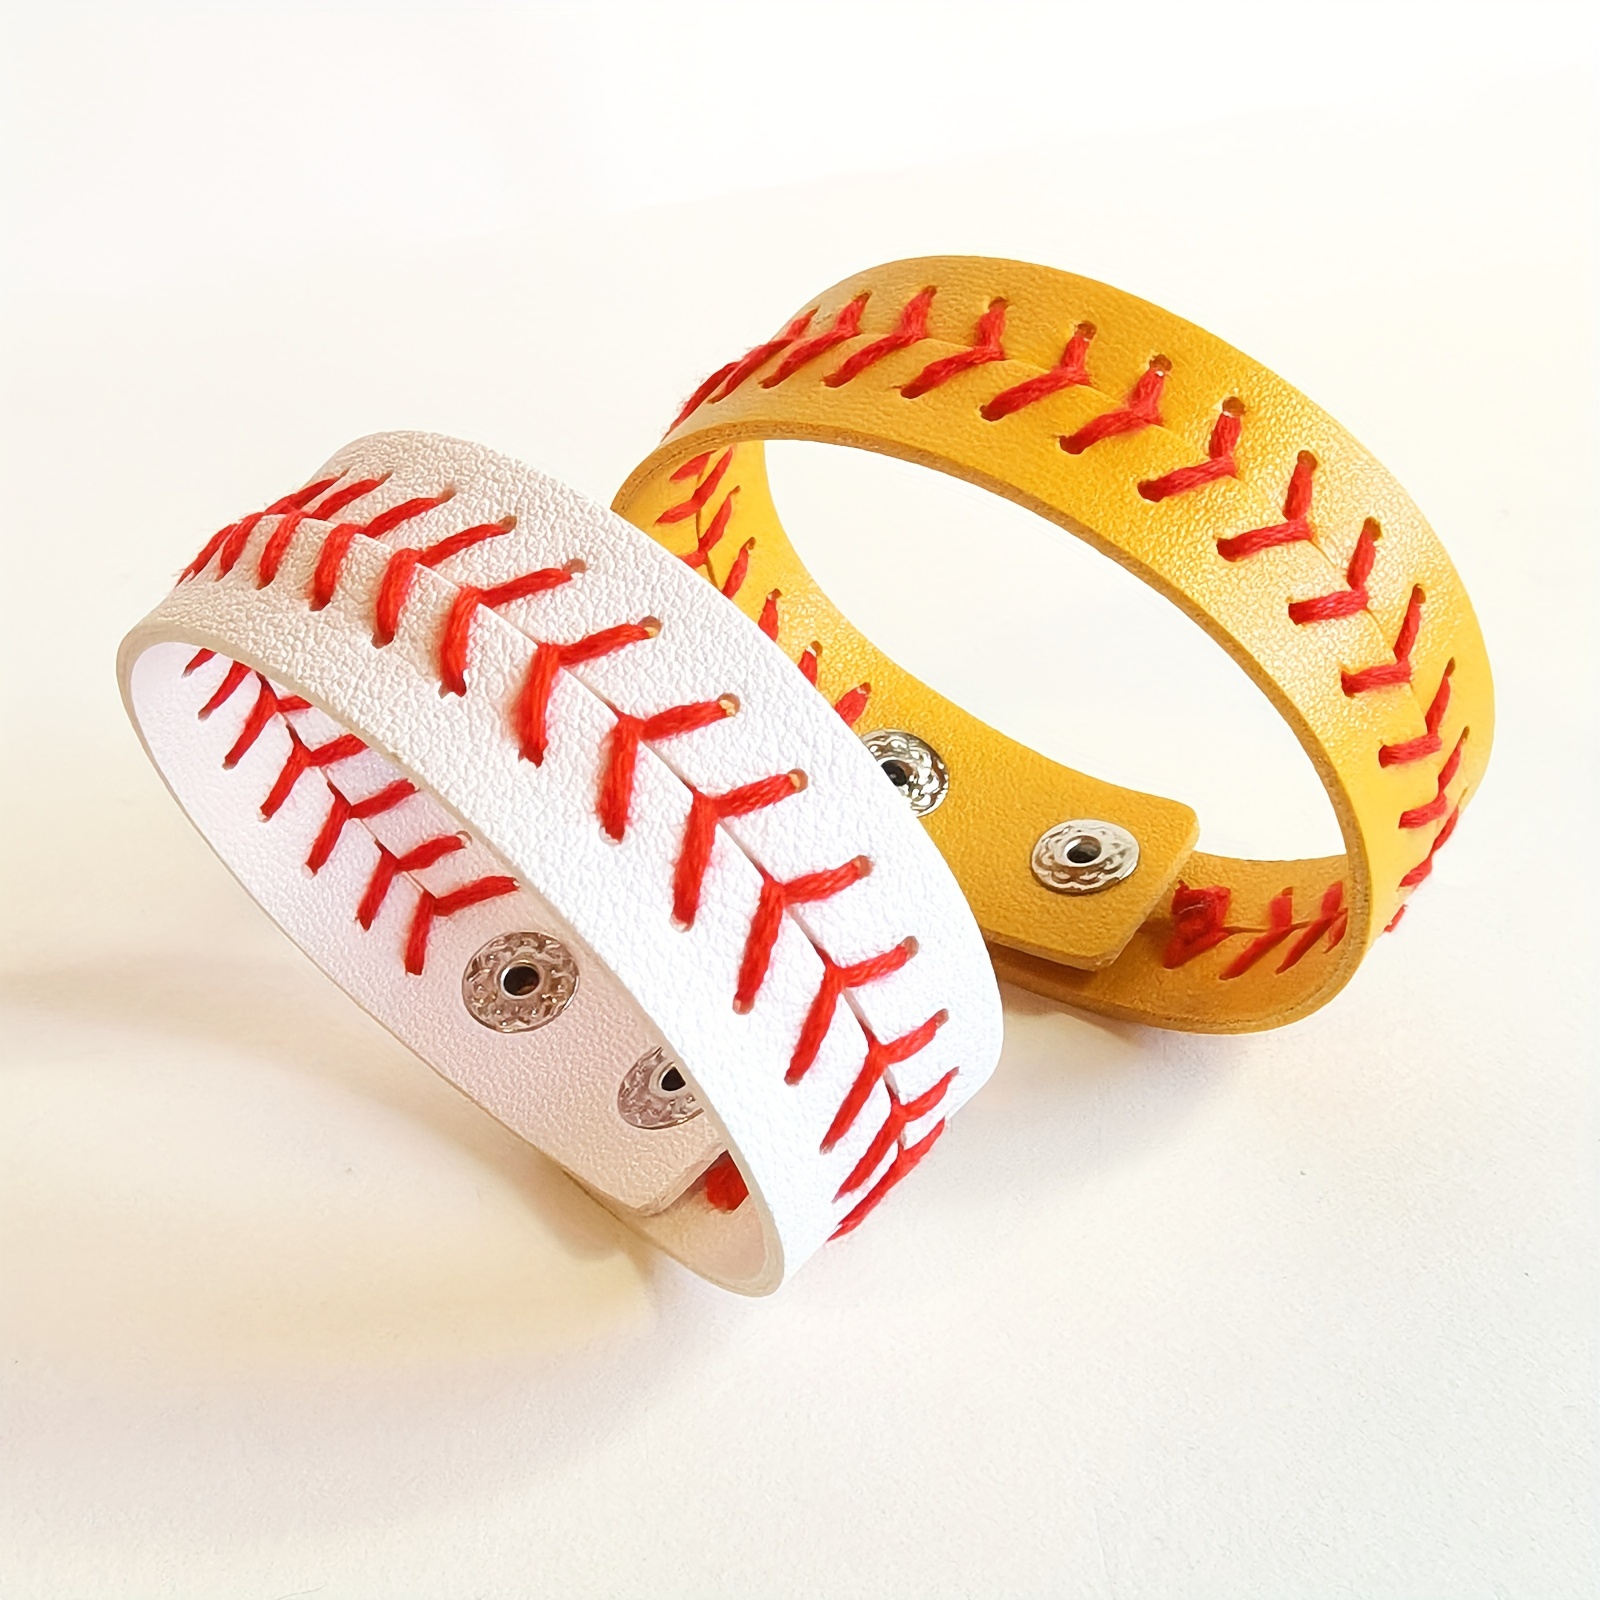 Play Ball Baseball Silicone Bracelet Home Run Baseball Boys Rubber Wrist with Bracelet Men Unisex,Temu